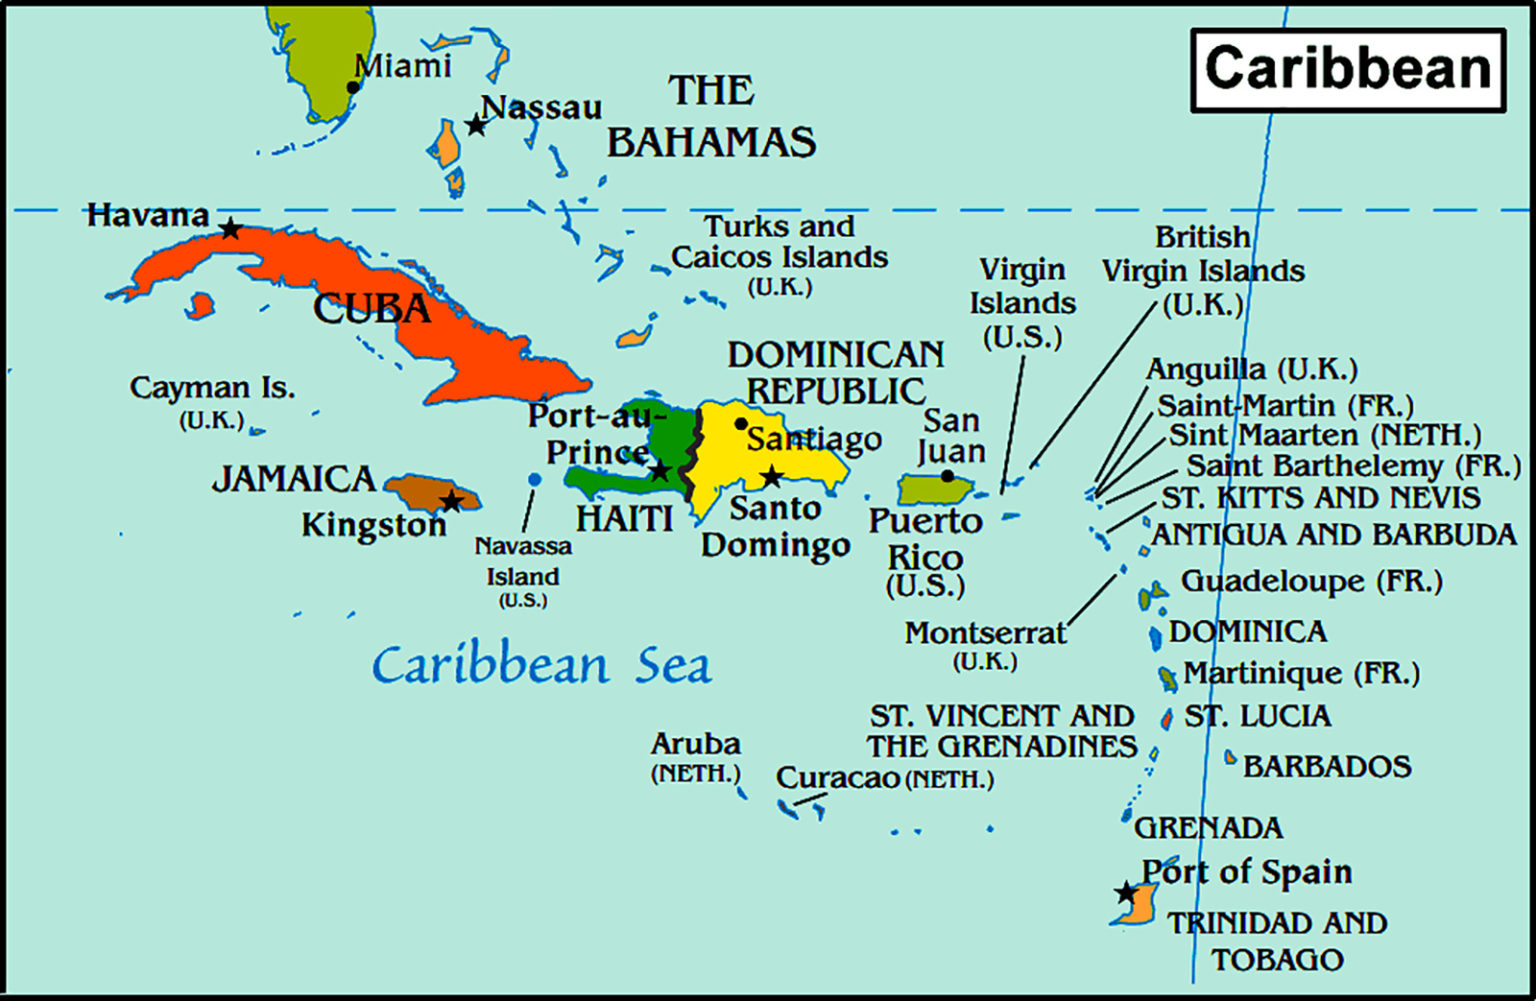 caribbean travel warnings